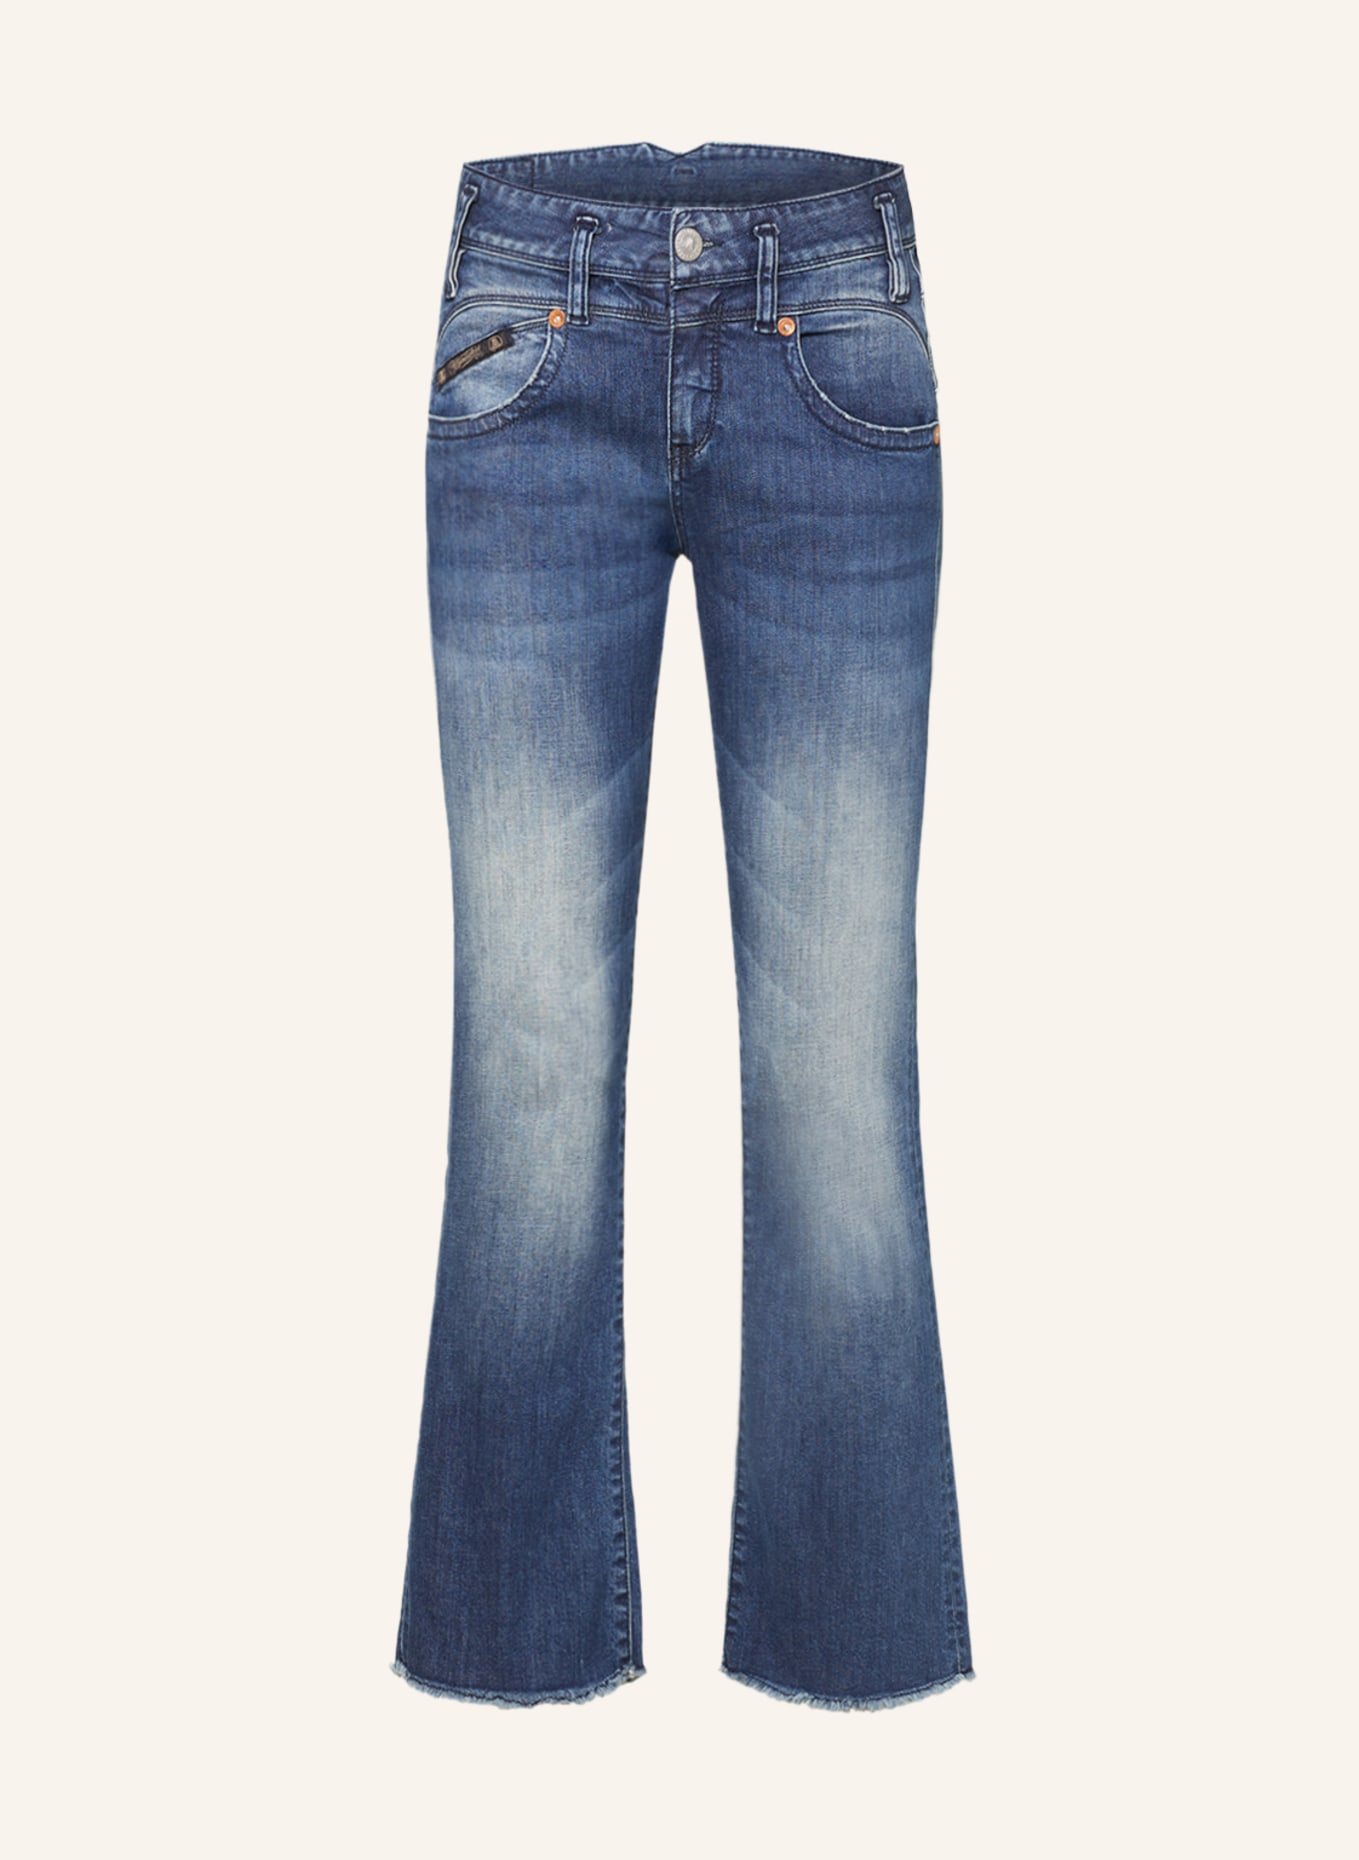 Herrlicher Bootcut Jeans PEARL, Farbe: 603 blue core (Bild 1)